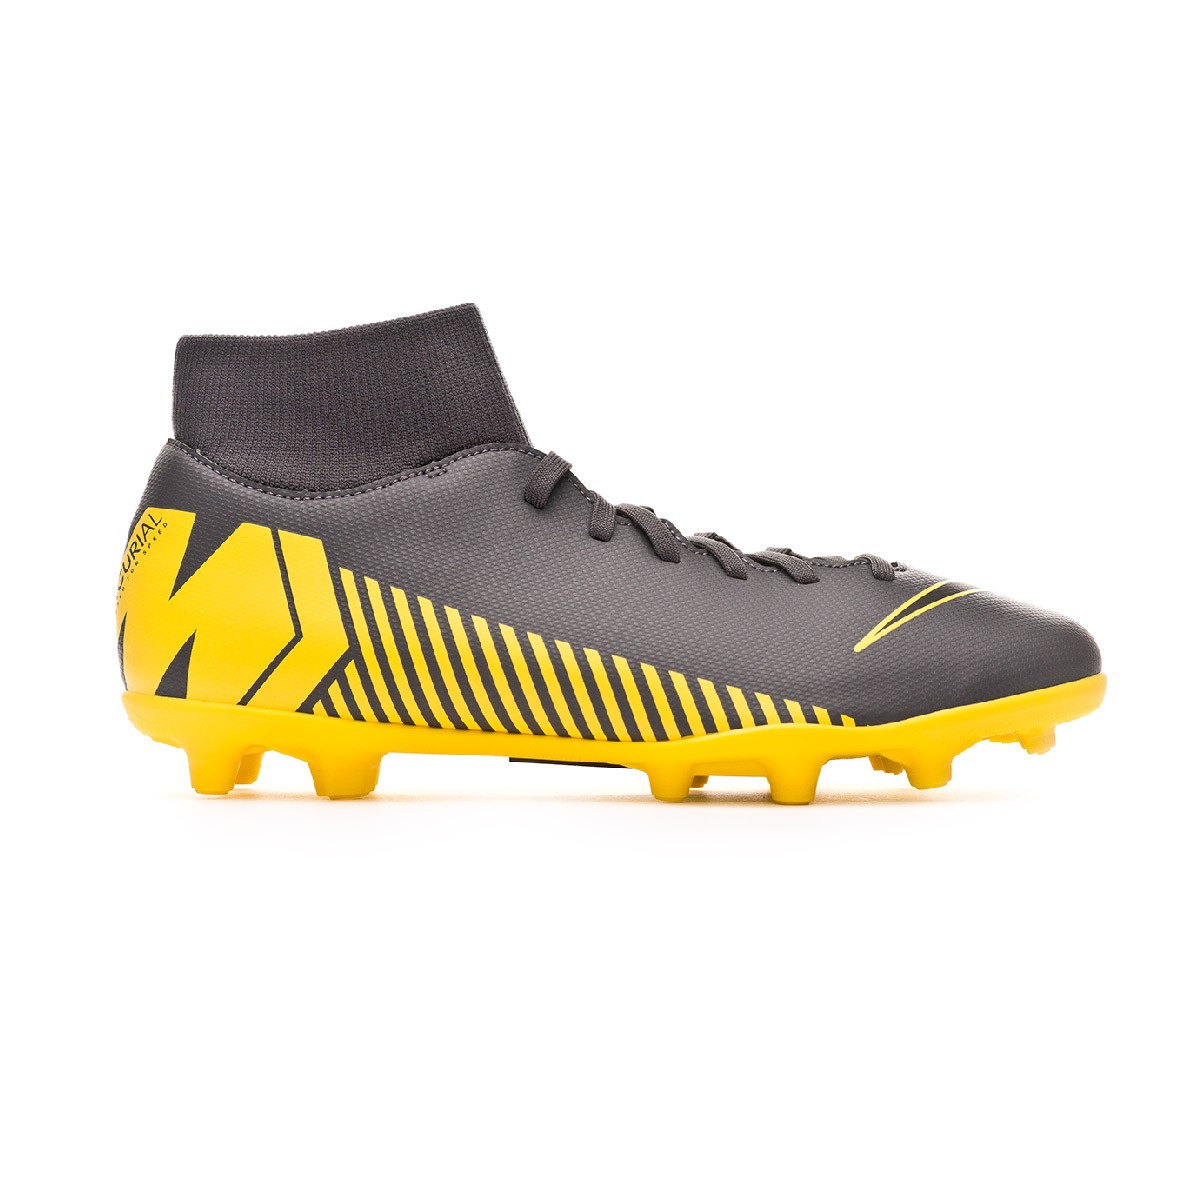 nike football boots yellow